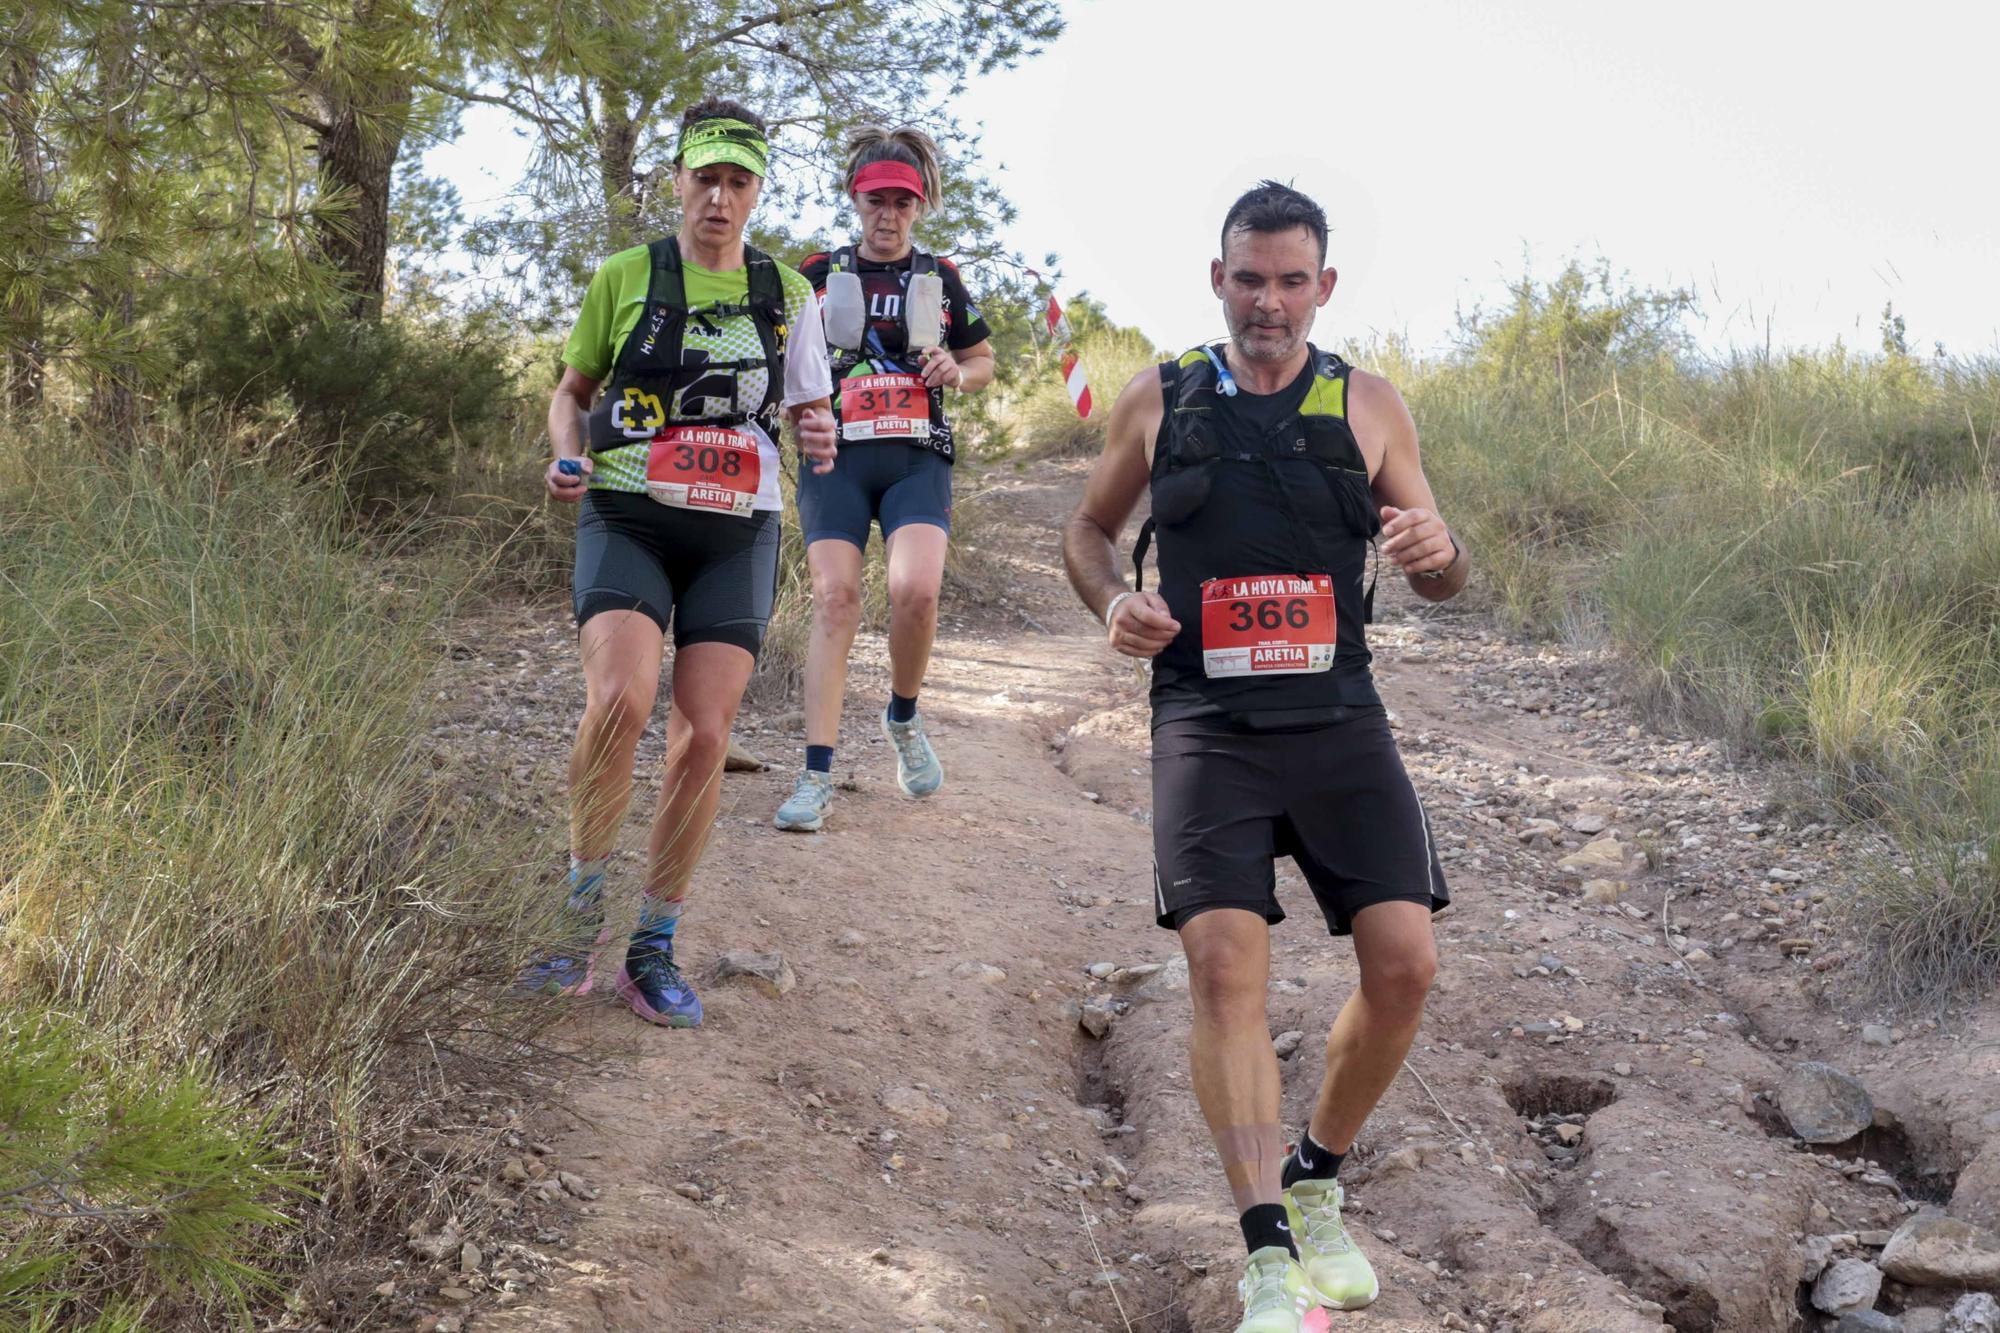 La Hoya Trail 2022 en Lorca